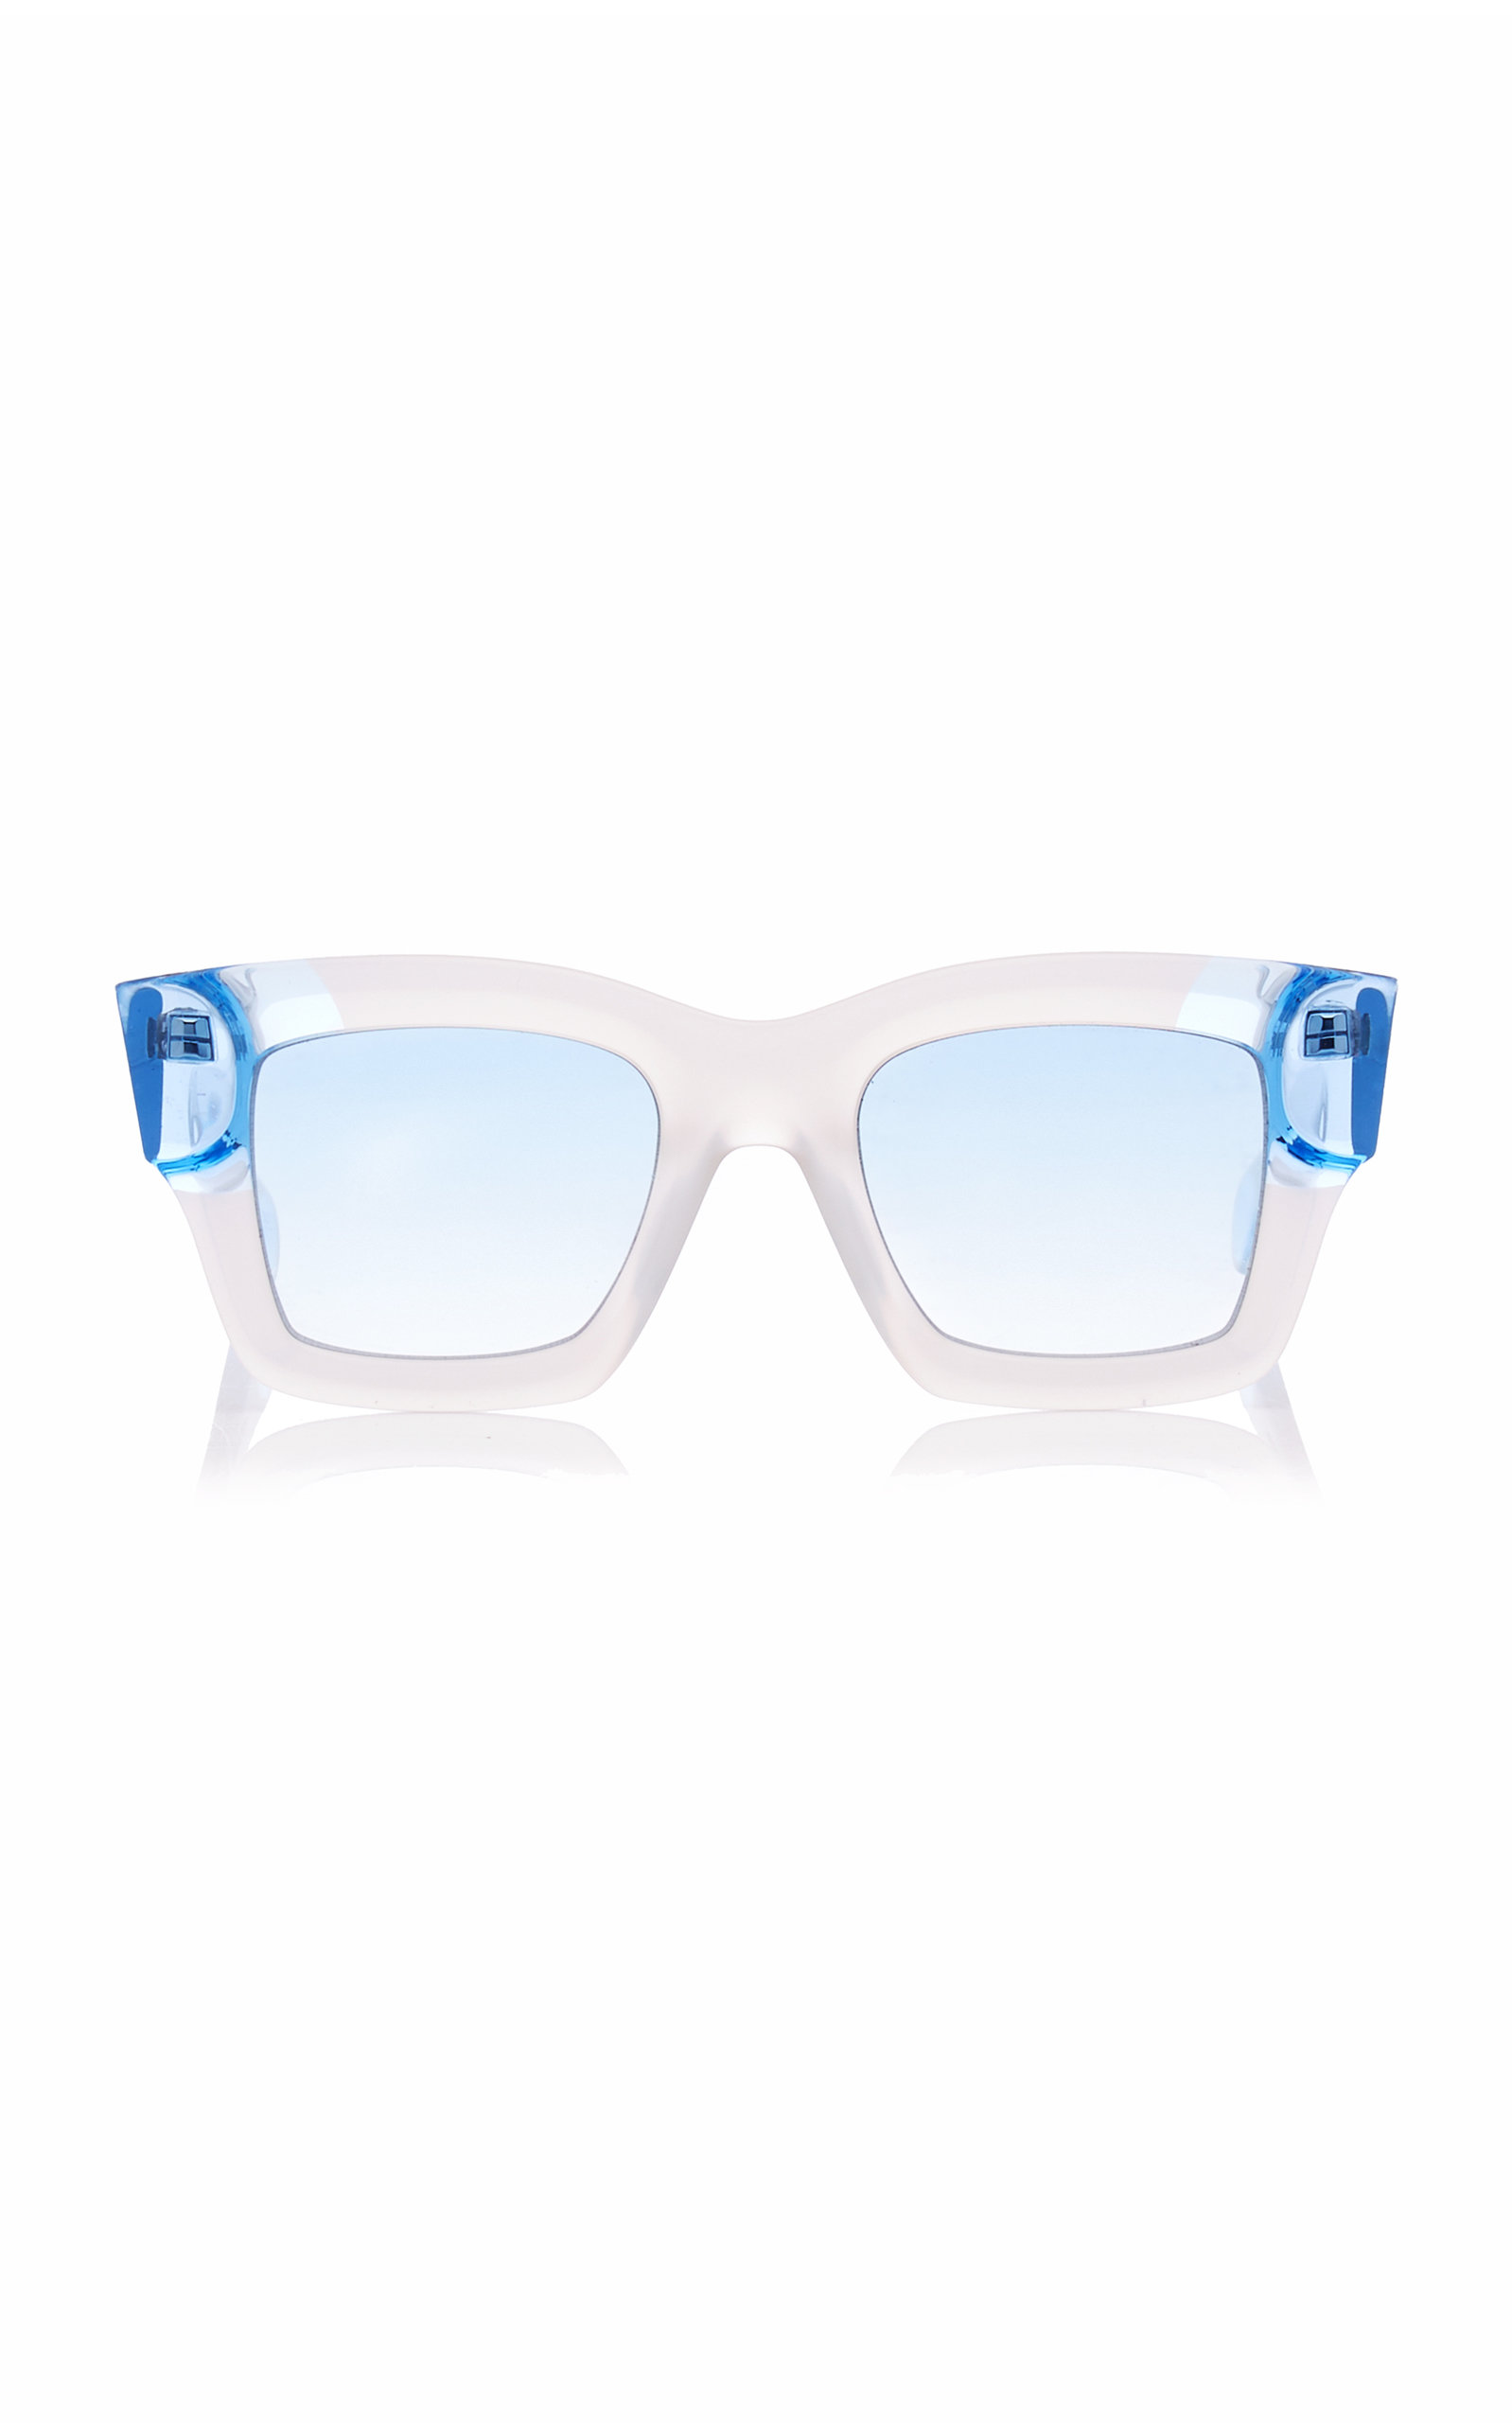 Jacquemus - Women's Baci D-Frame Acetate Sunglasses - Pink/blue - Moda Operandi